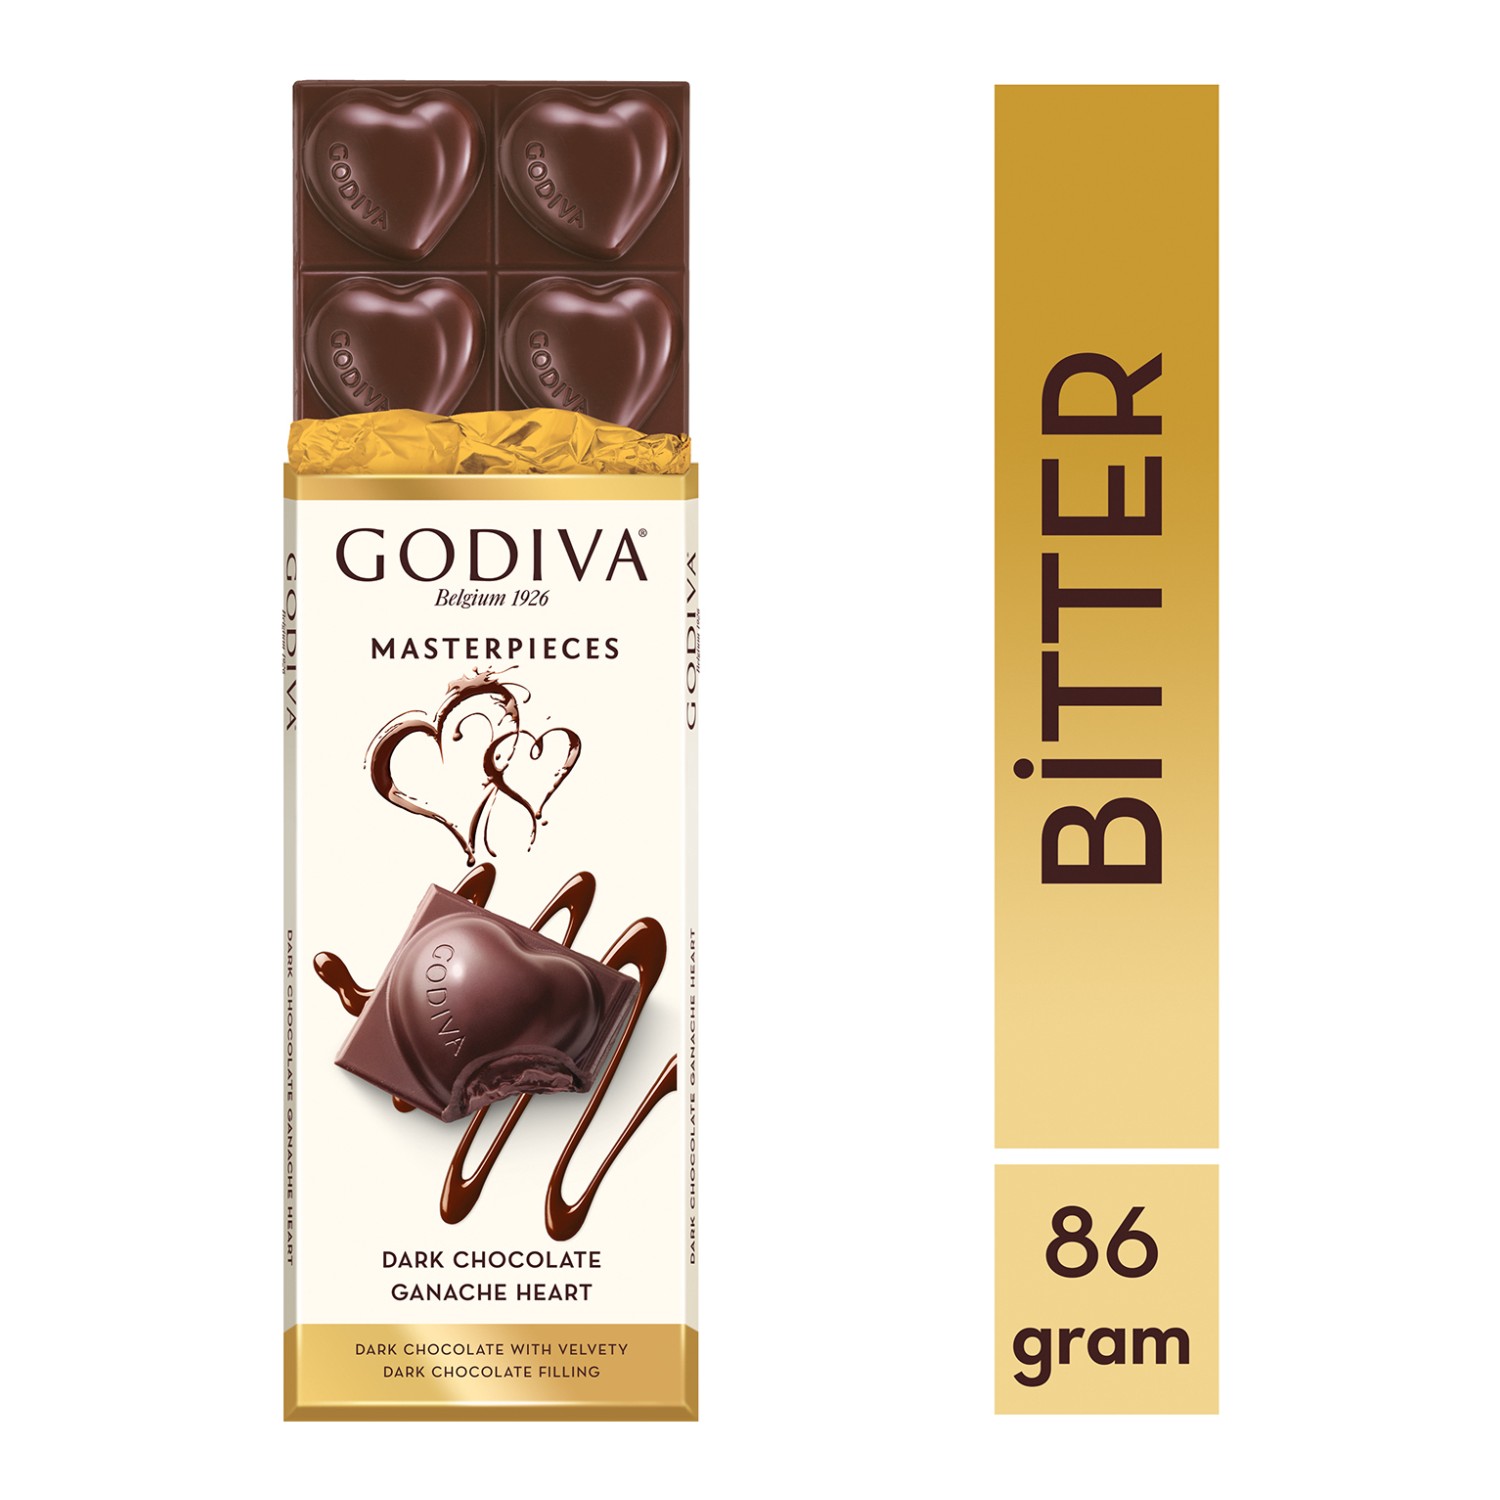 Kira sözleşmesi Godiva bitter çikolata ekşi